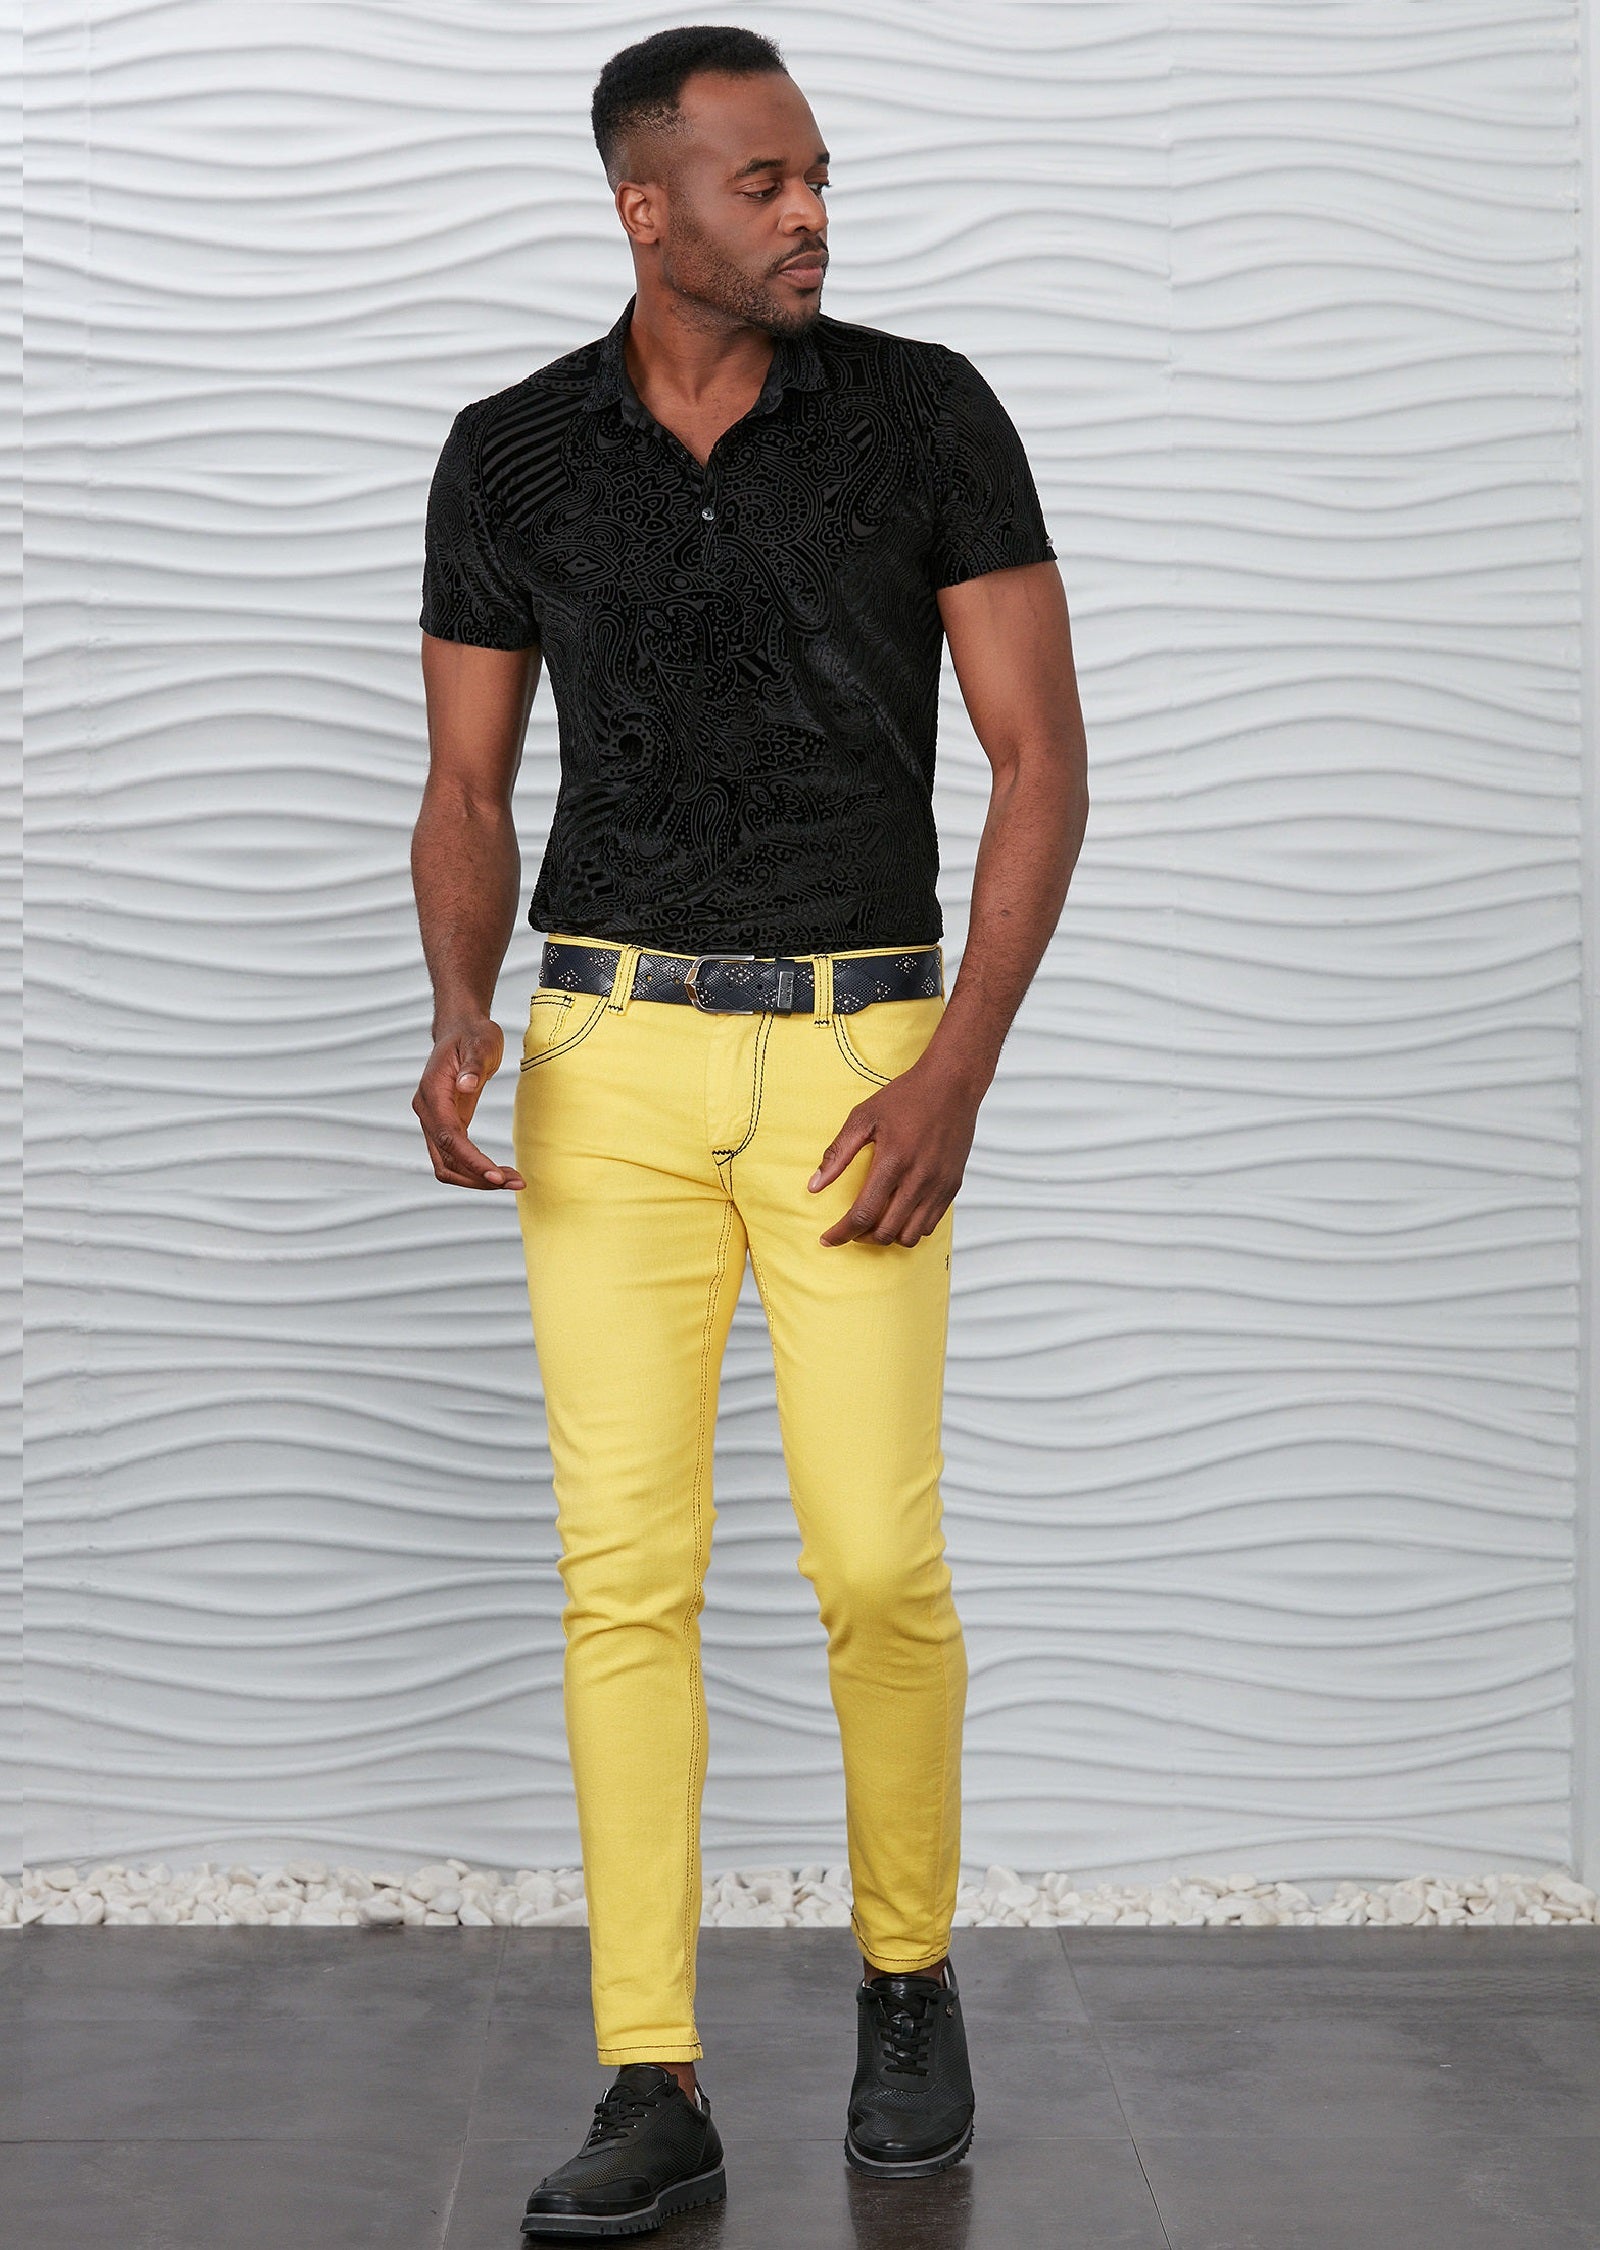 black slacks, yellow shirt, charcoal tie | Fashion suits for men, Men  fashion casual shirts, Shirts